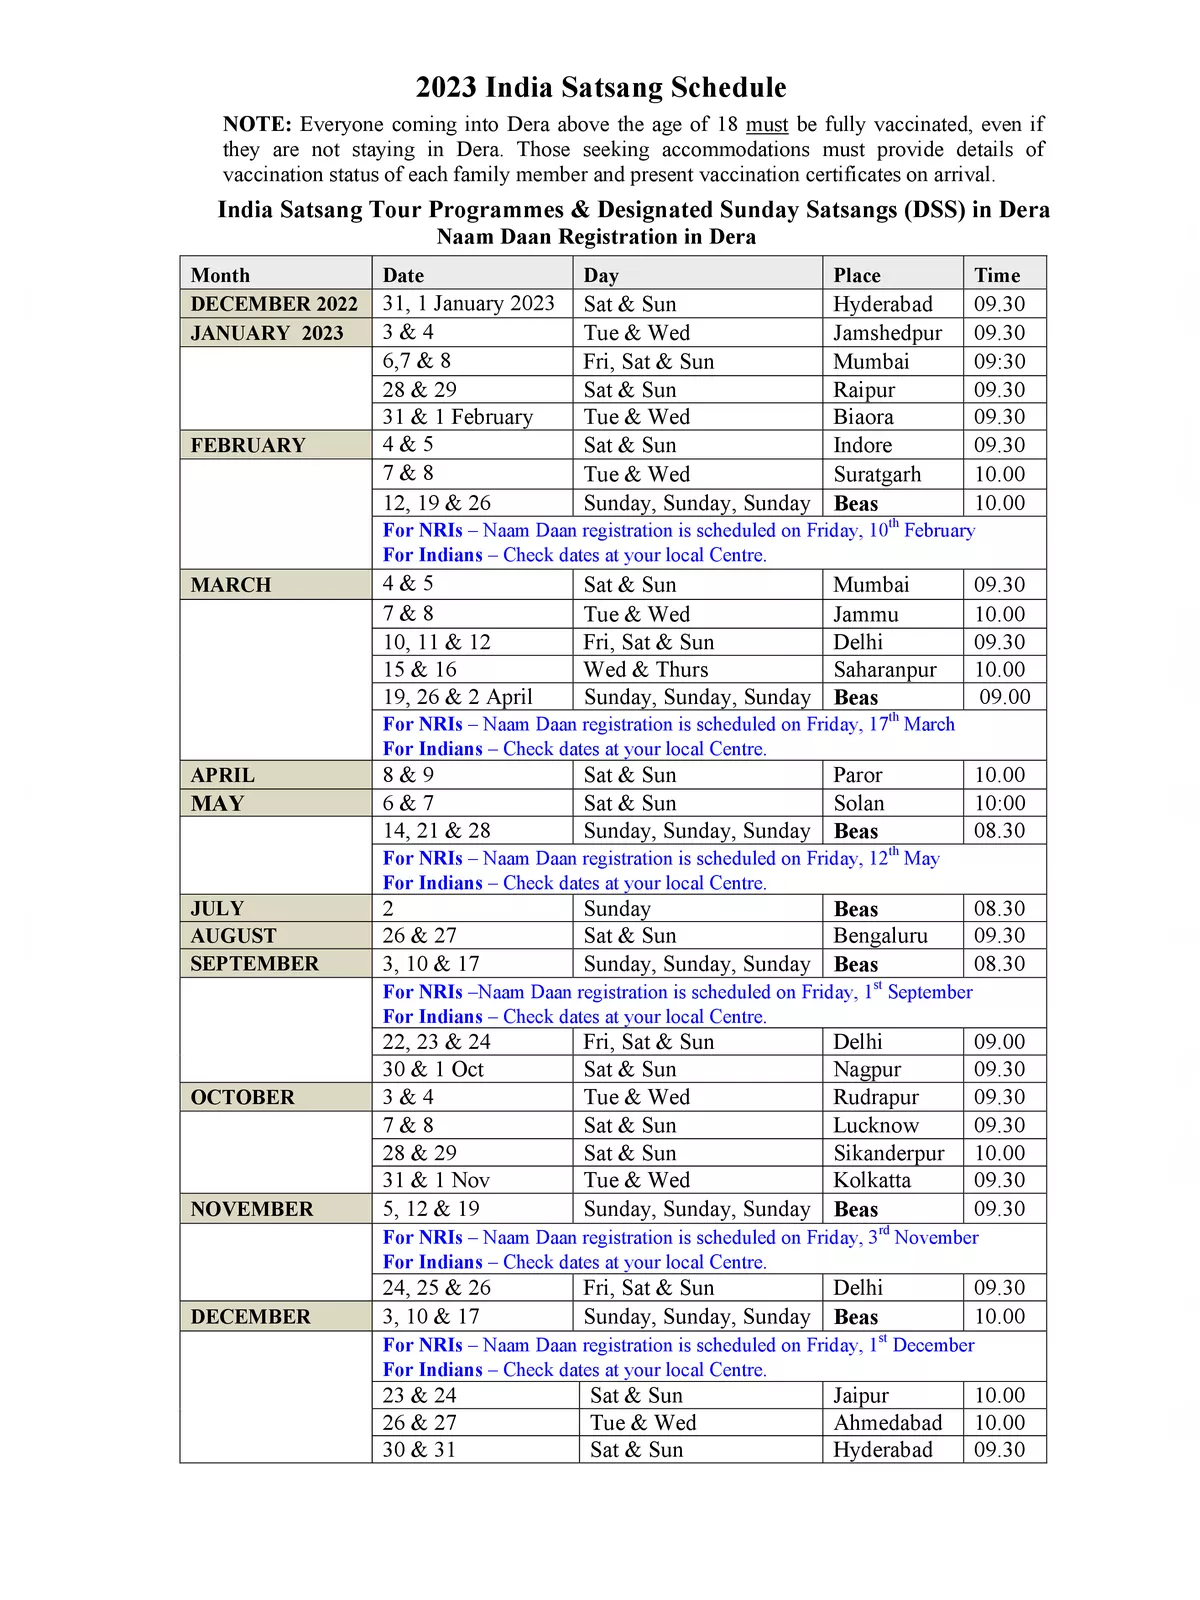 RSSB Satsang Schedule 2023 PDF InstaPDF